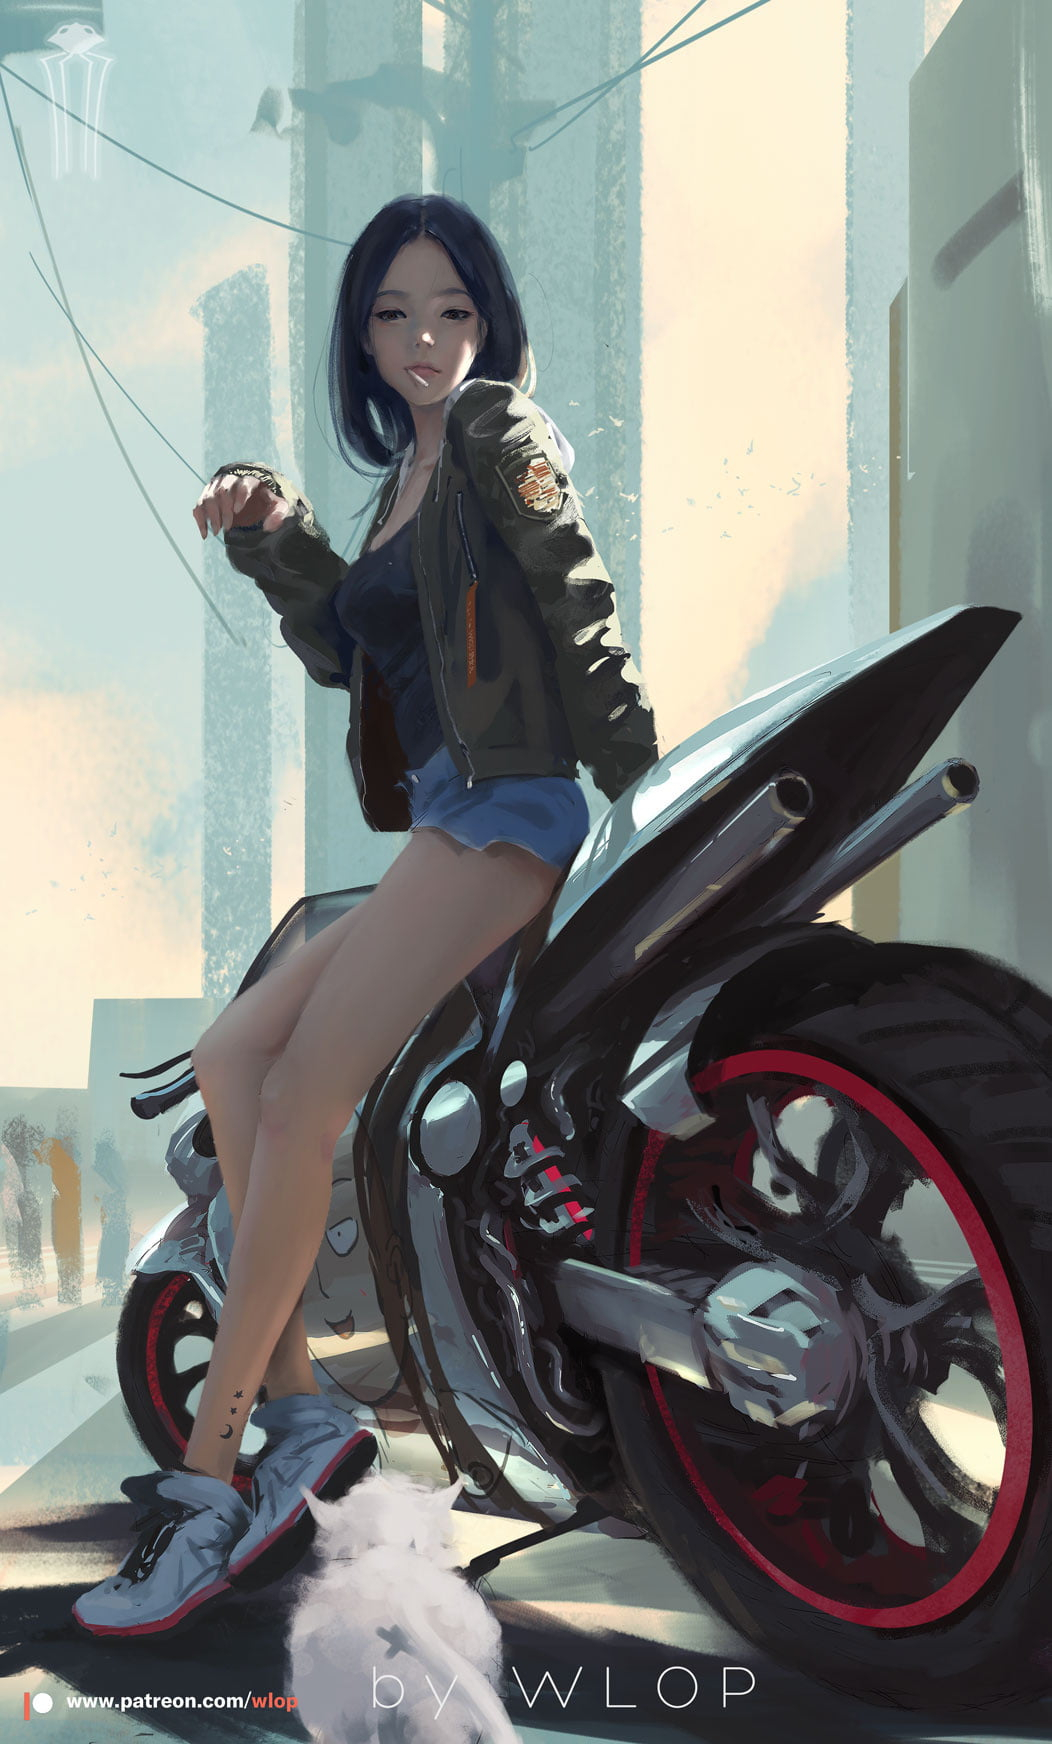 Woman sitting on sports bike illustration, WLOP, anime girls wallpaper